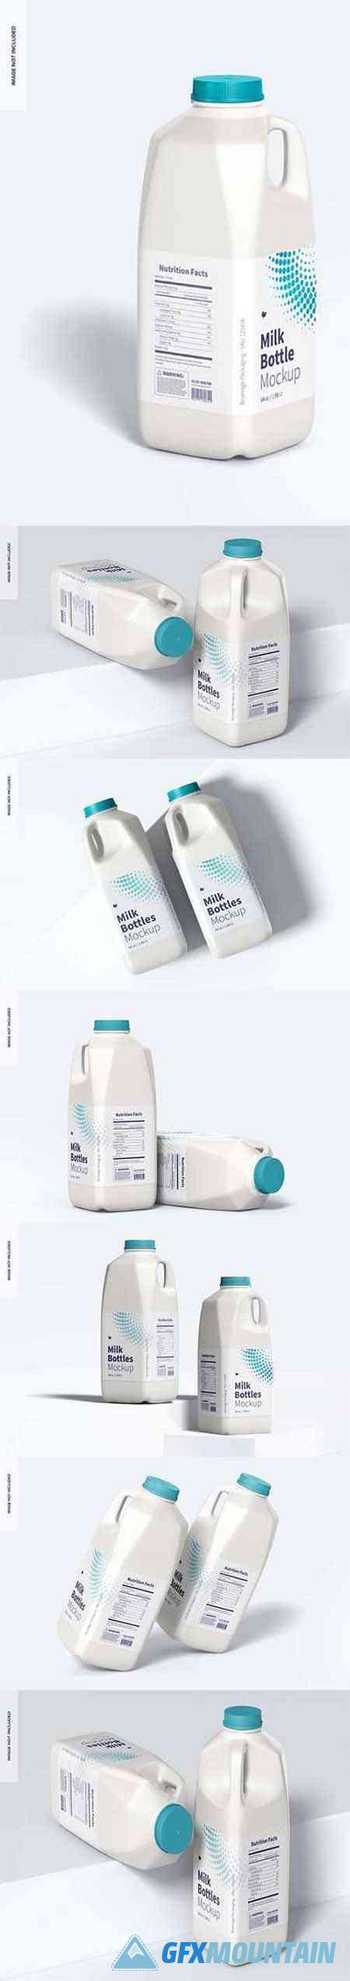 64 oz milk bottles mockup